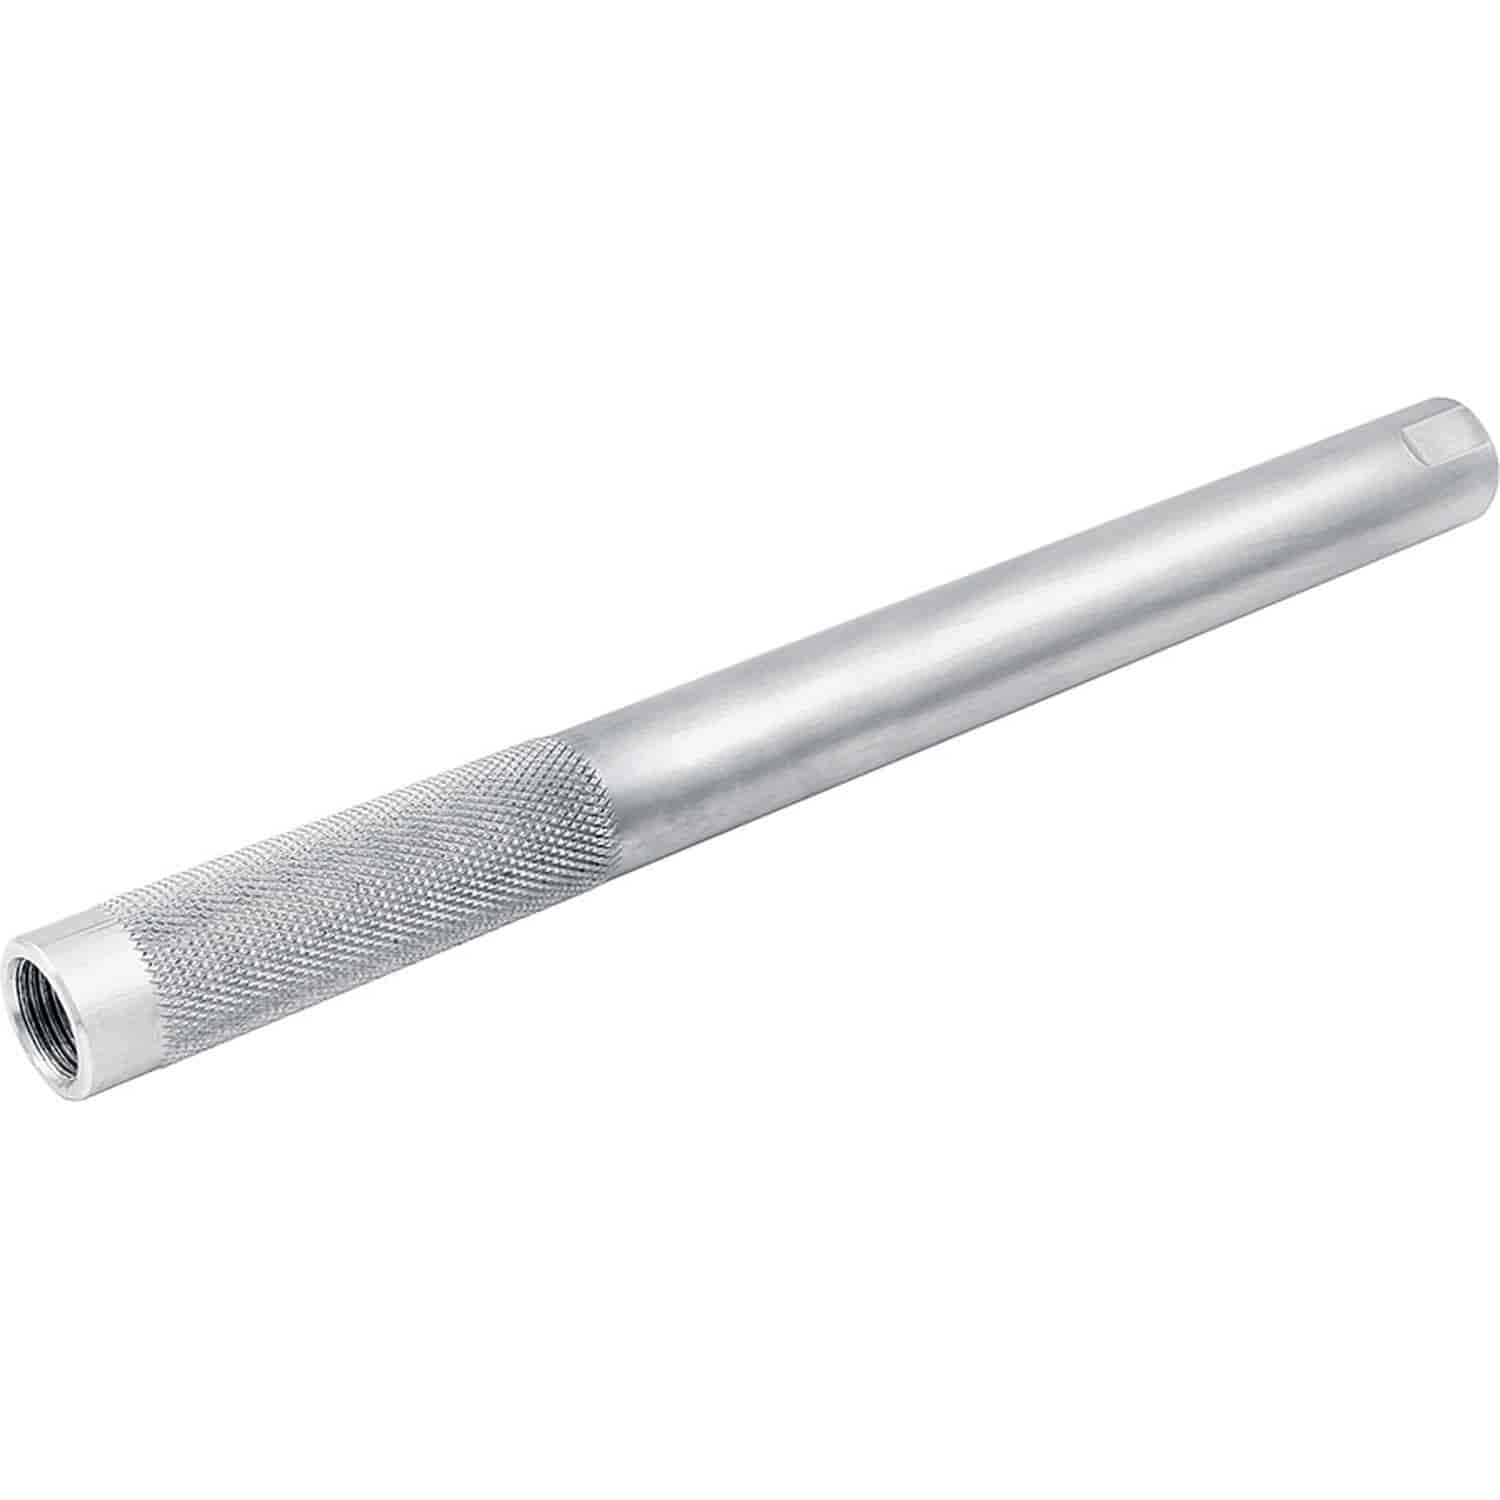 Swedged Aluminum Tie Rod Tube Length: 17